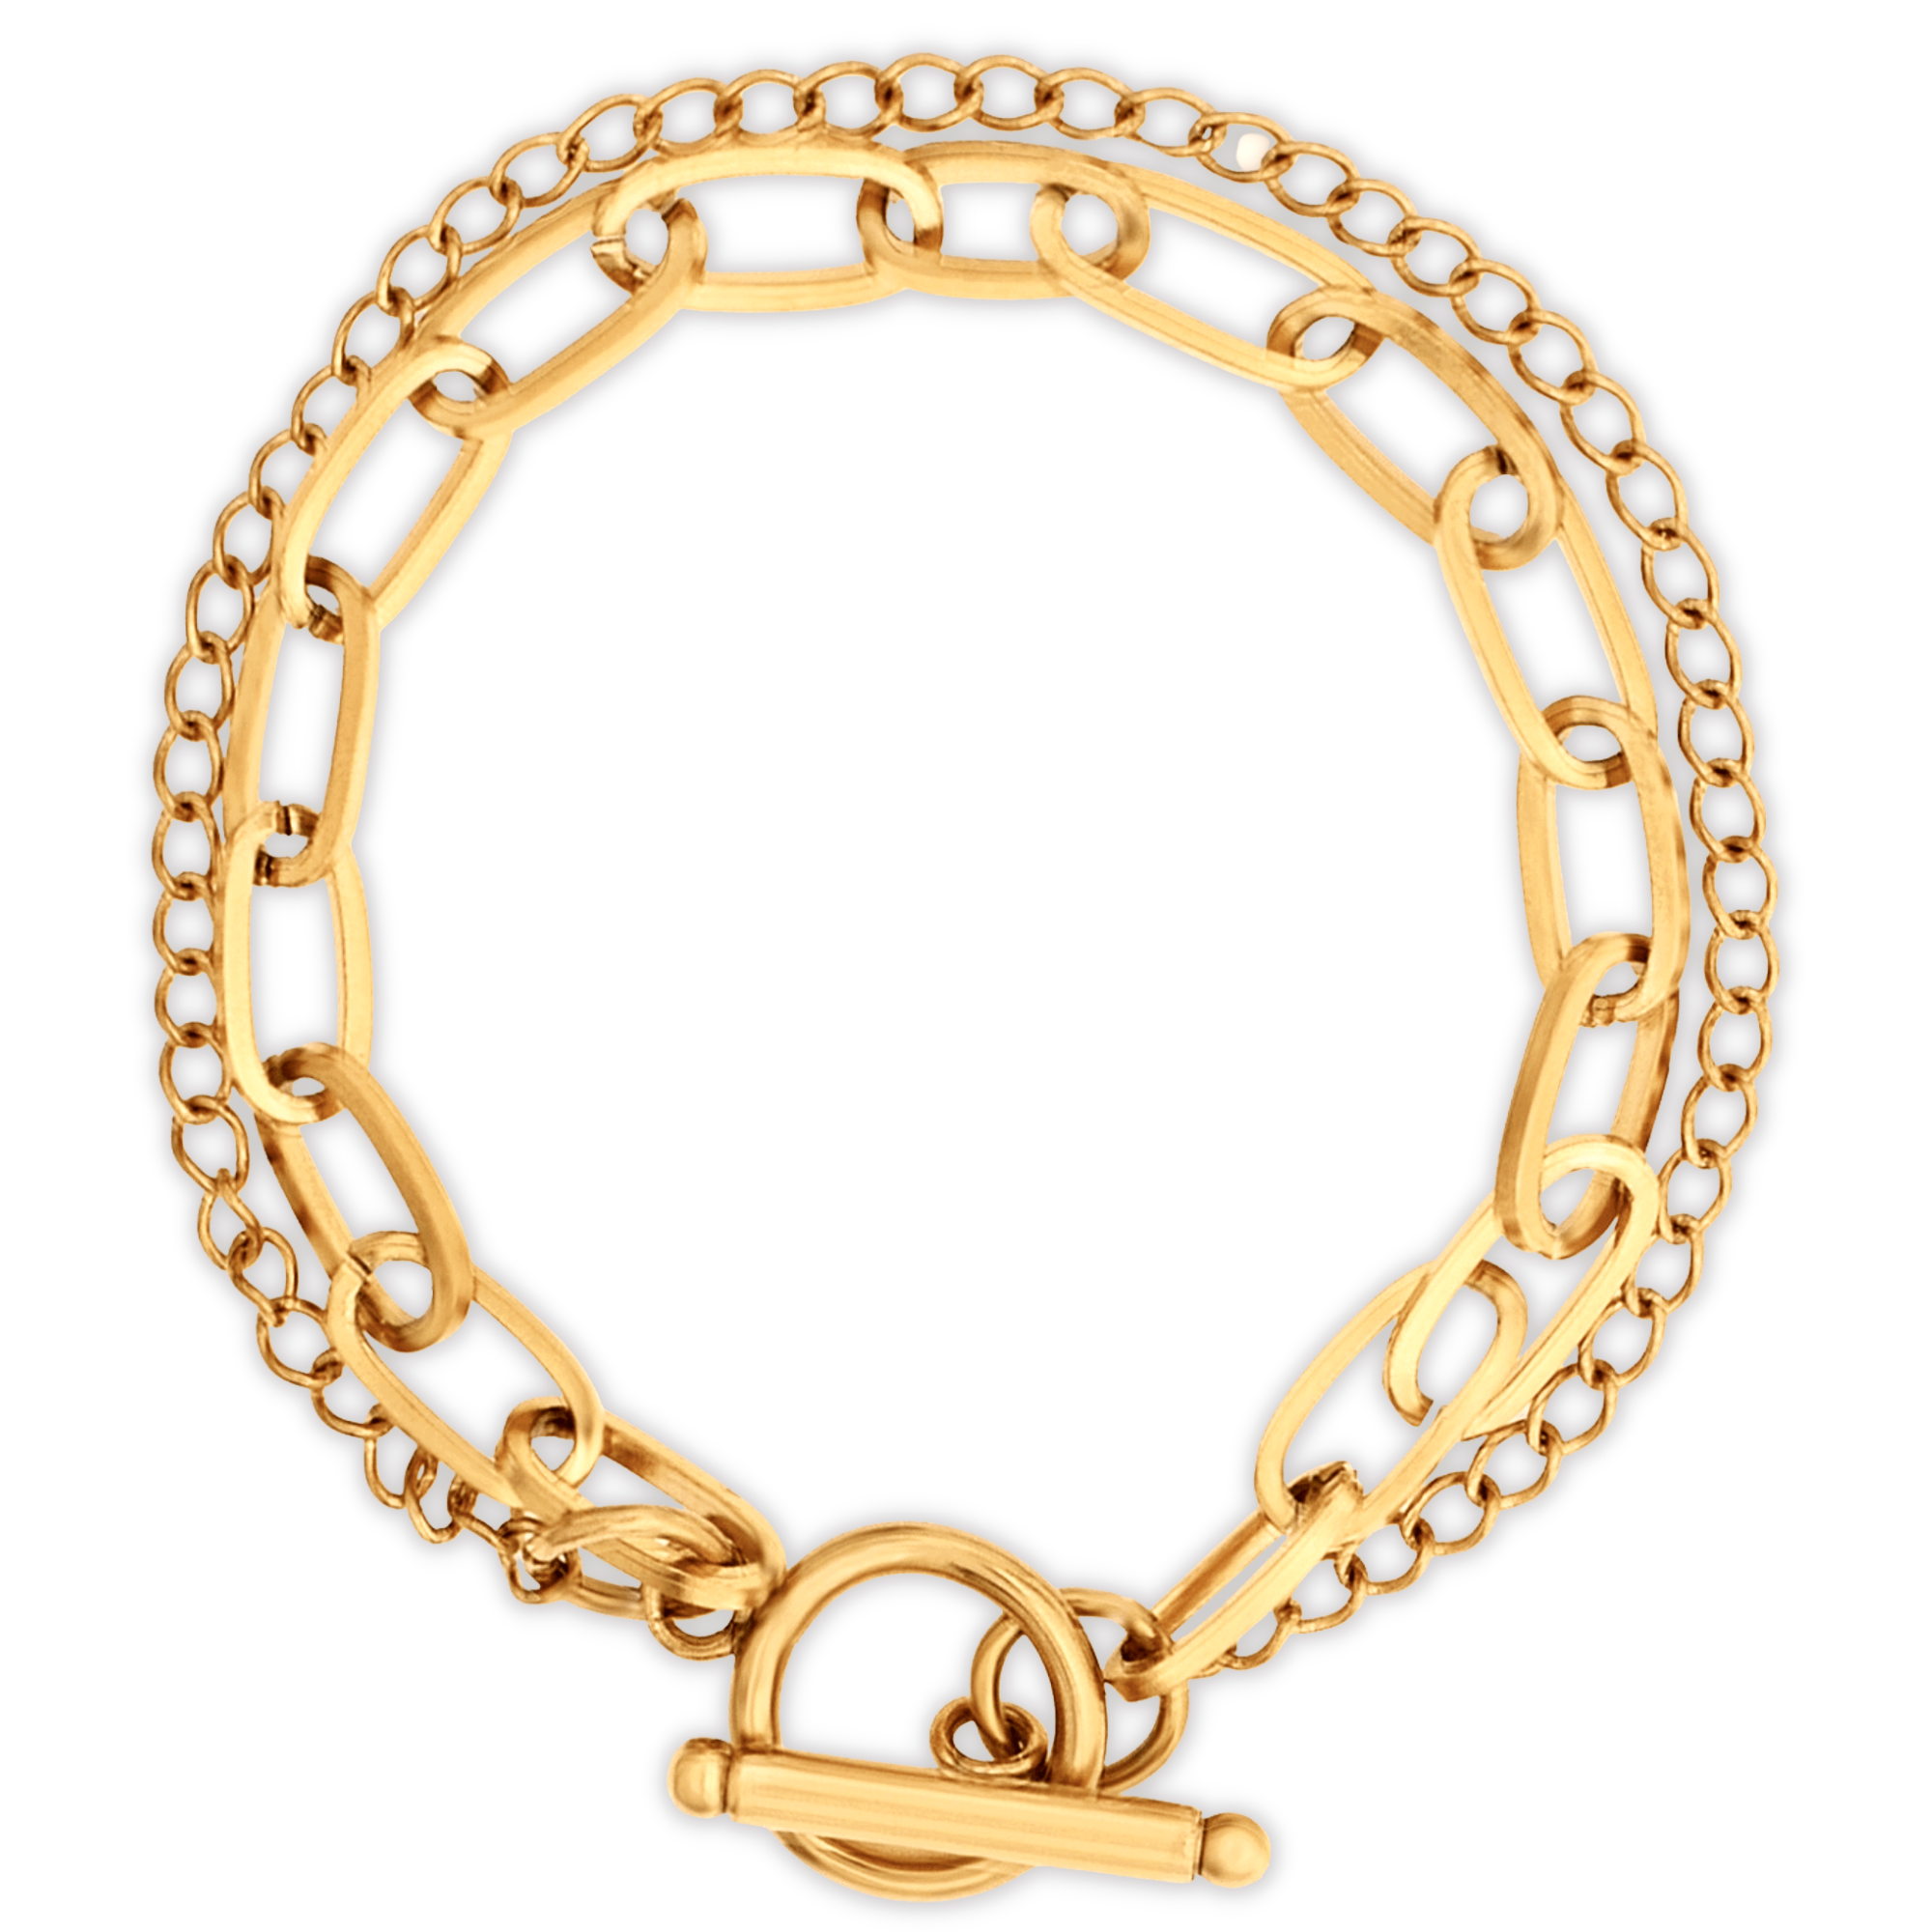 Ellie Vail Jewelry - Ellie Vail - Arden Double Chain Toggle Bracelet